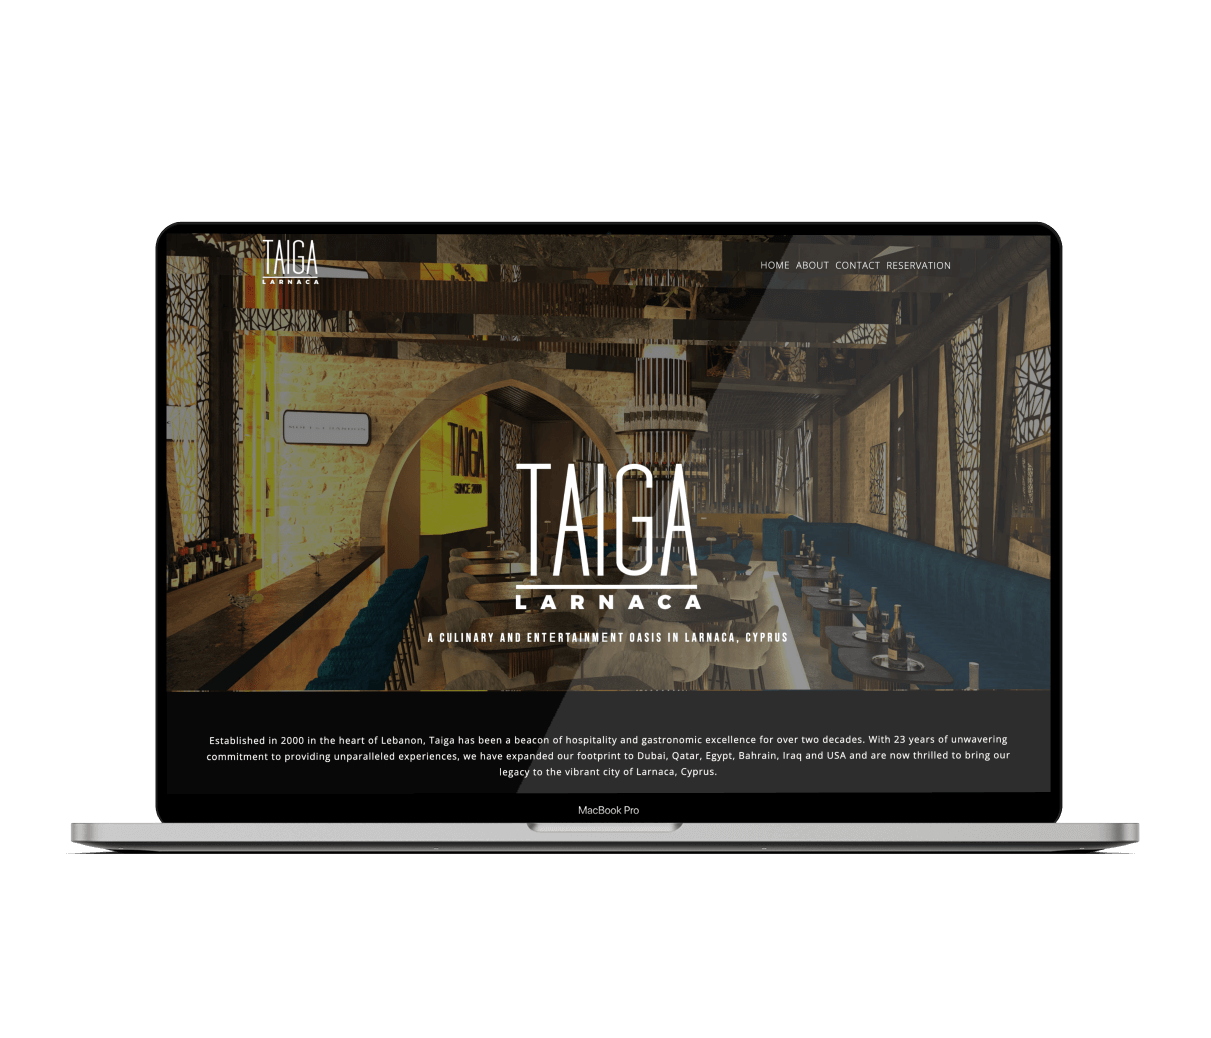 Taiga Larnaca Project for Odindigital